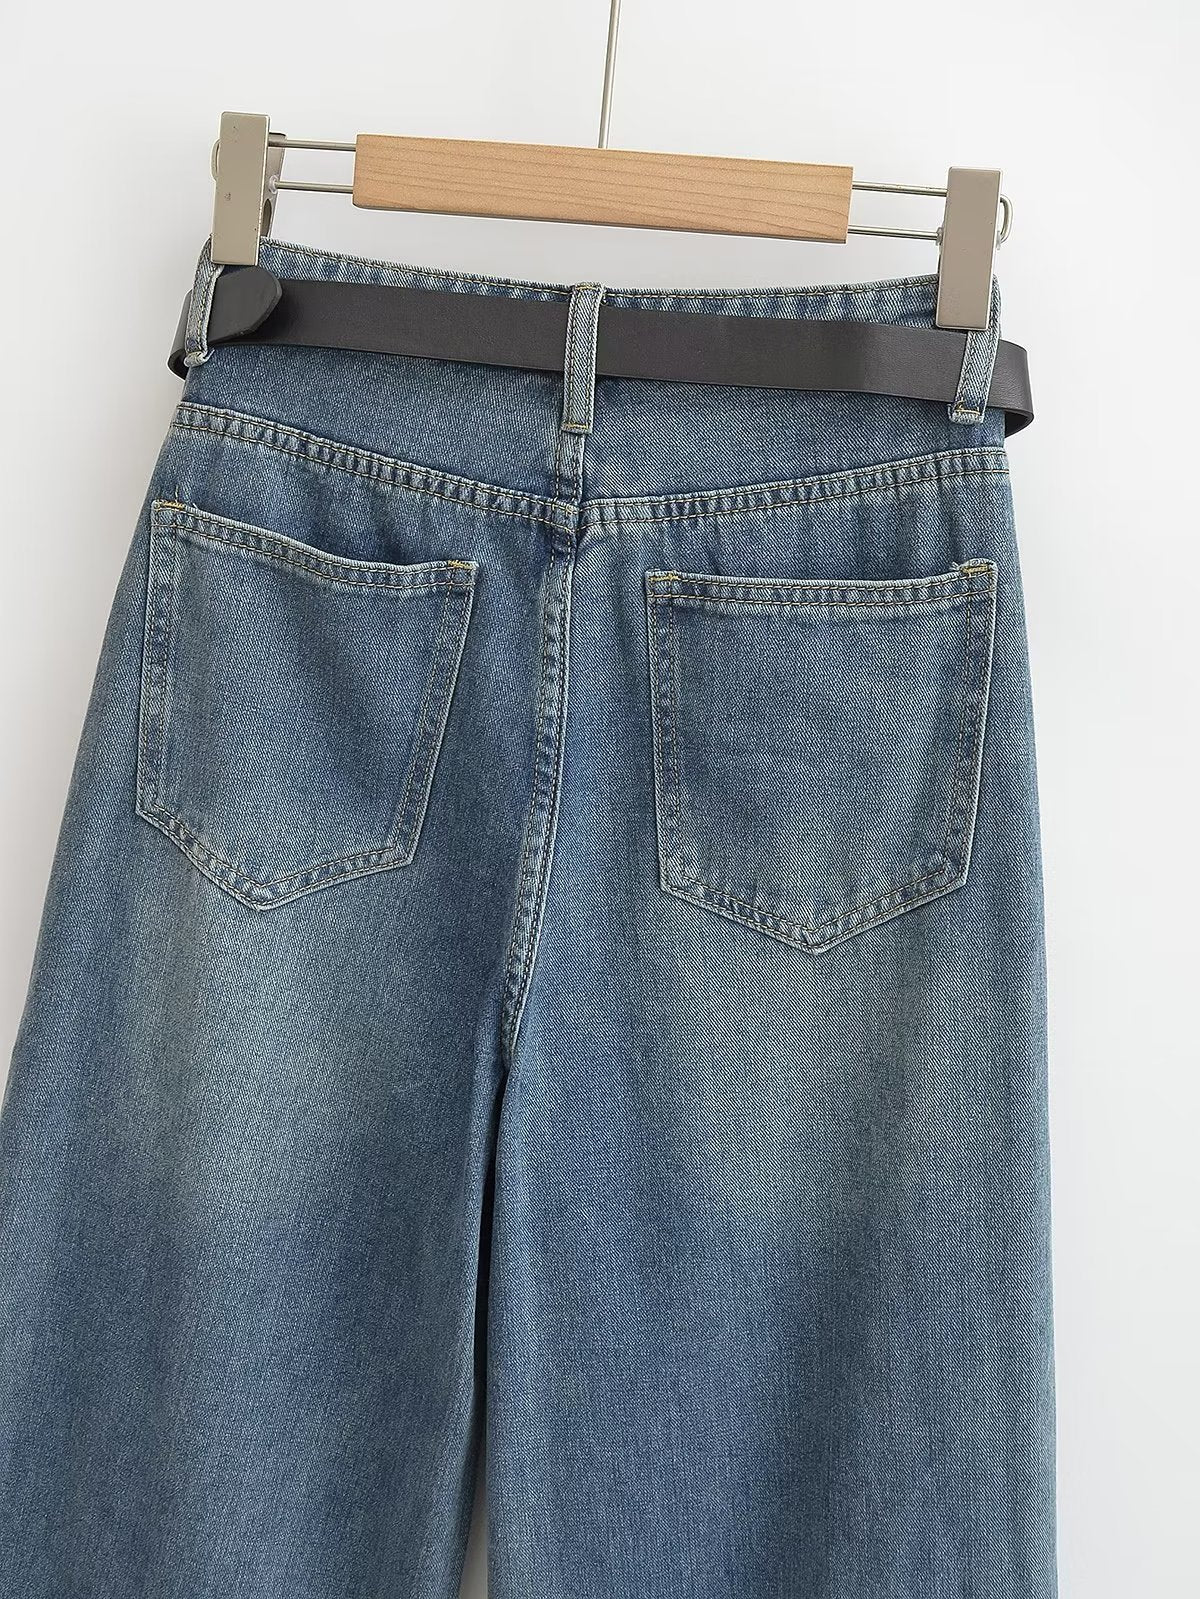 Navy Blue Jeans Belt for Women